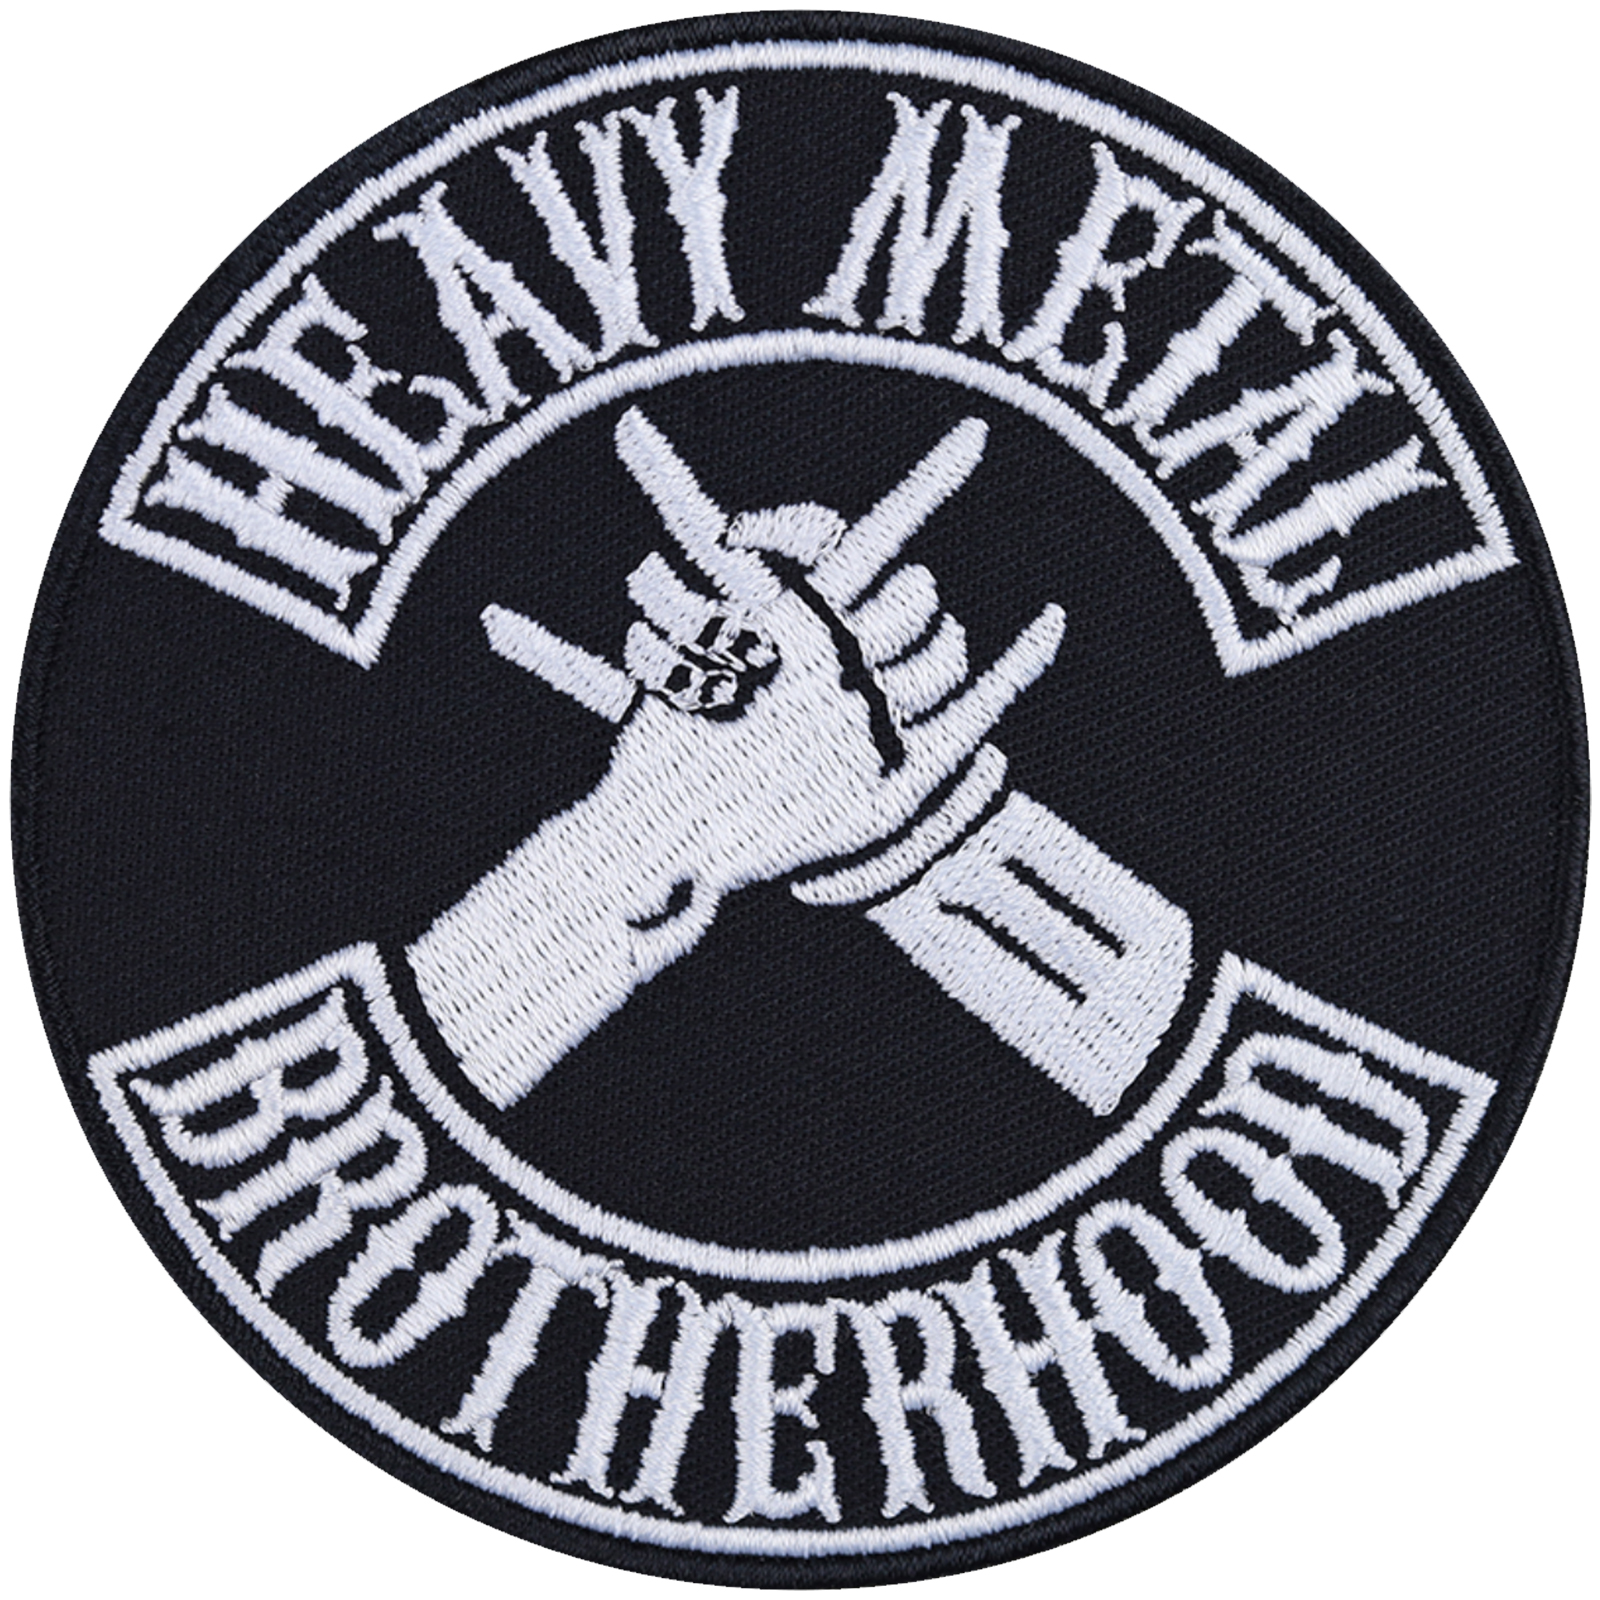 Heavy Metal brotherhood - Patch